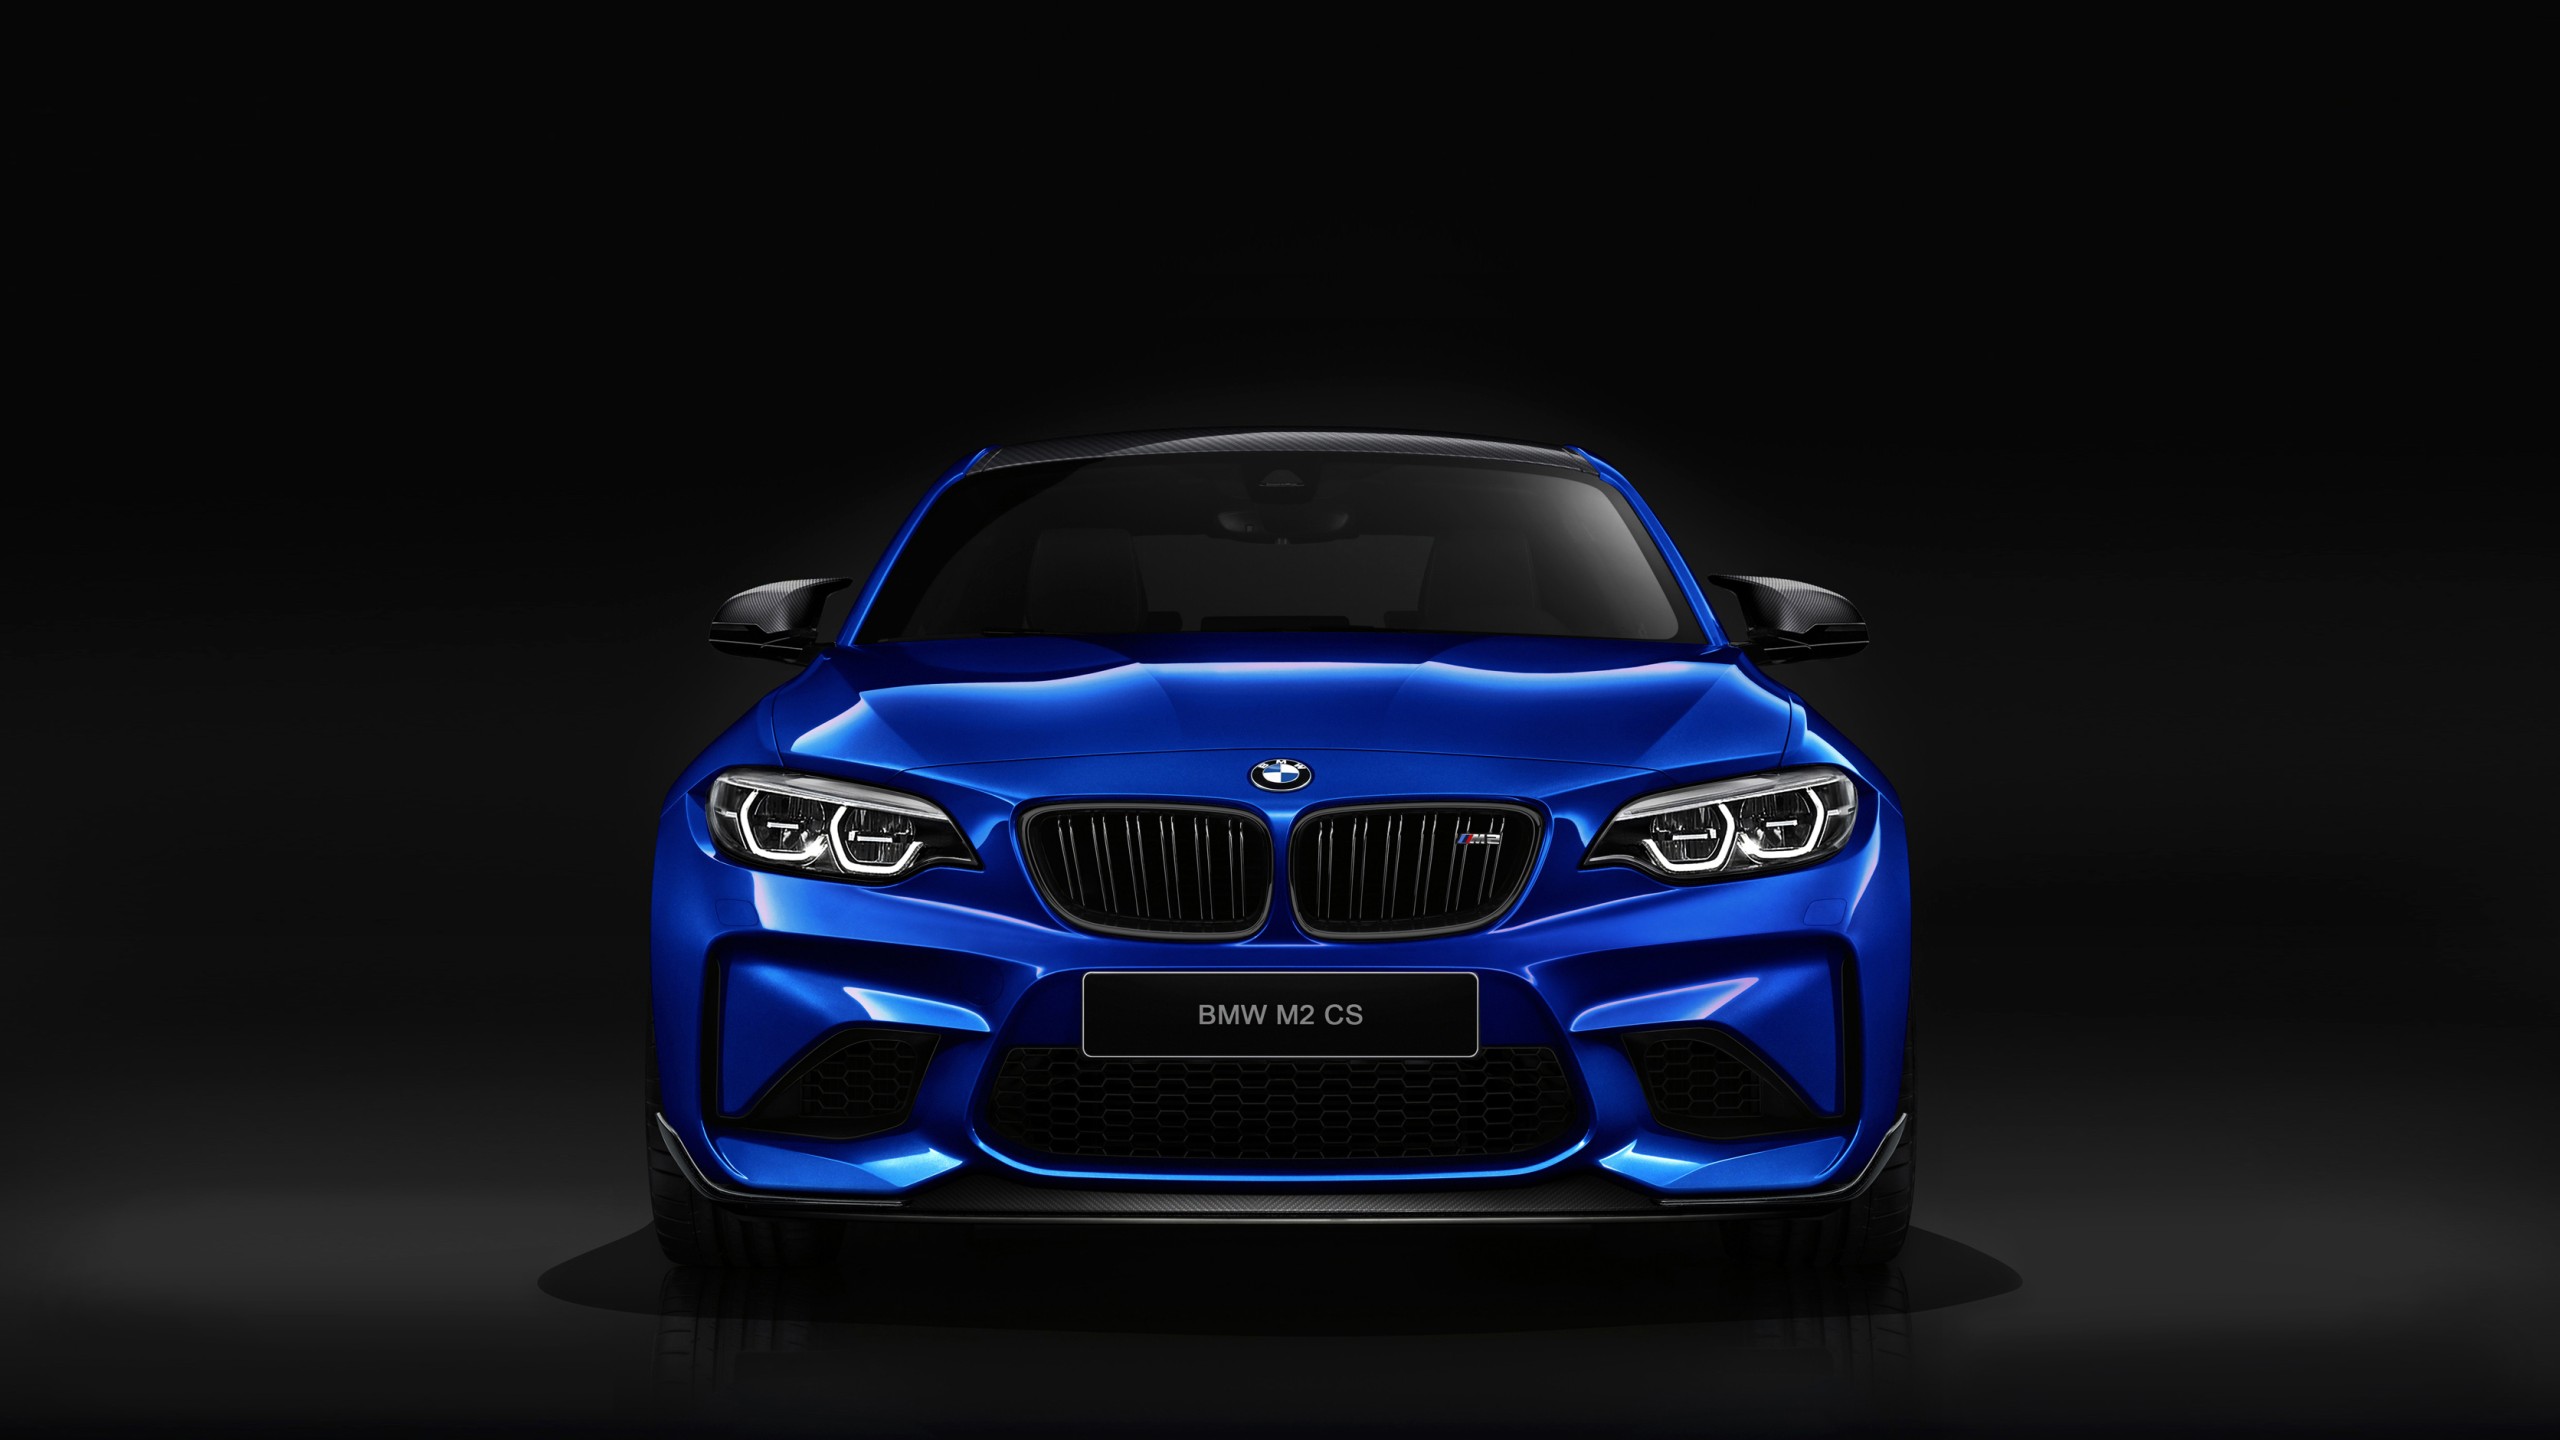 2017 BMW M2 CS Wallpaper | HD Car Wallpapers | ID #8079